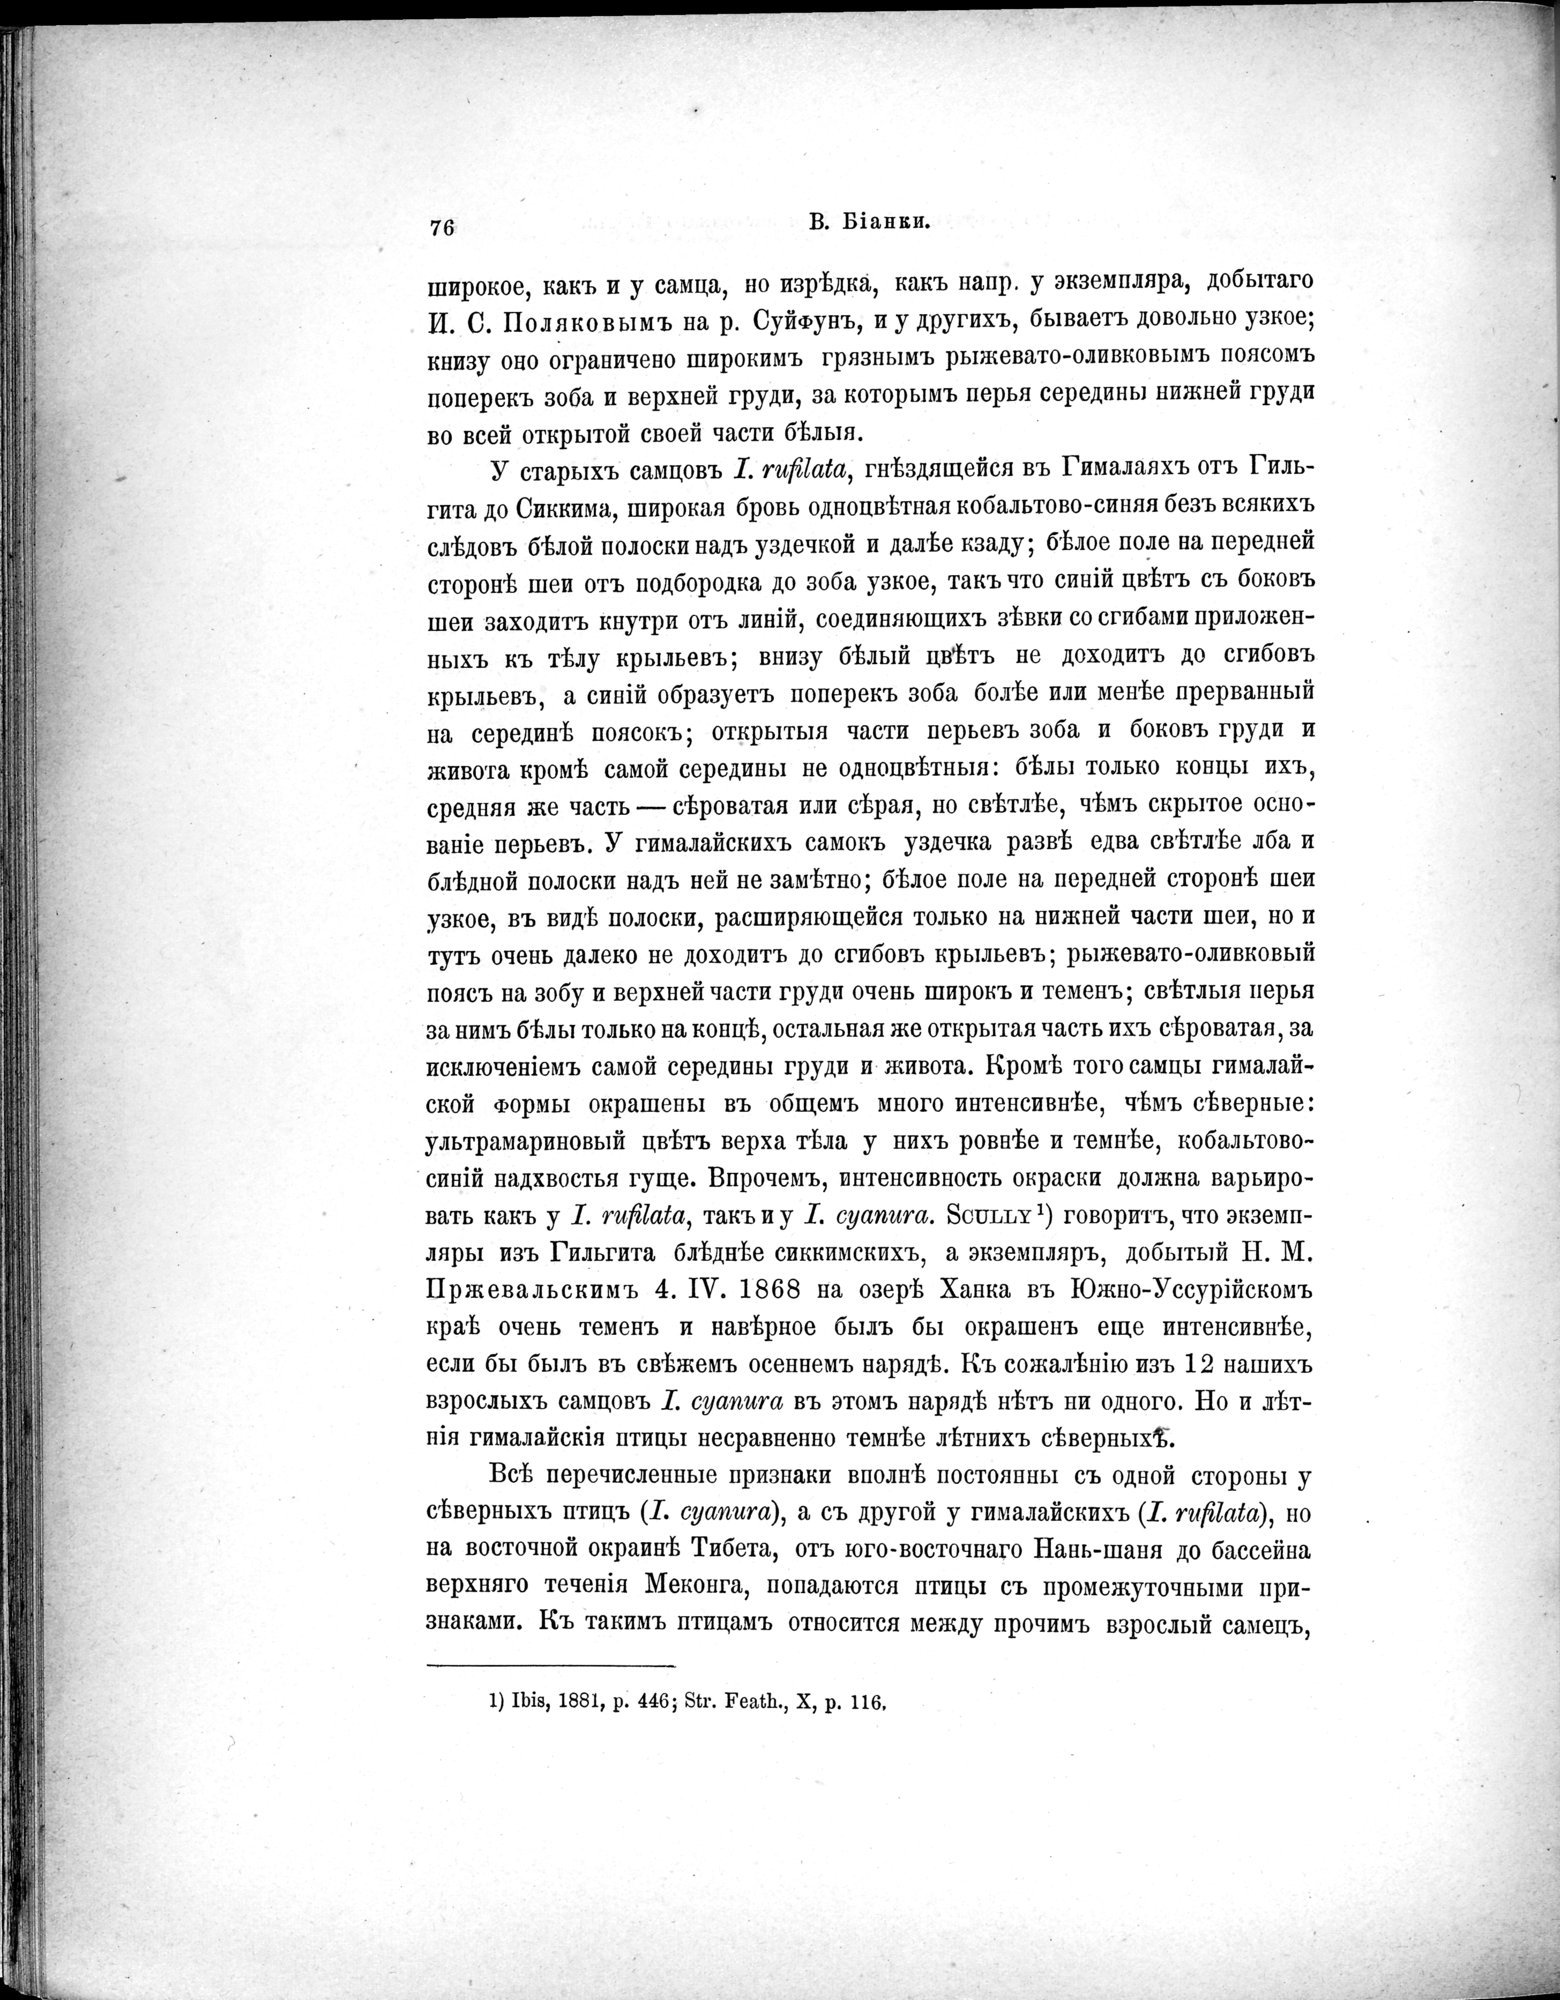 Mongoliia i Kam : vol.5 / Page 148 (Grayscale High Resolution Image)